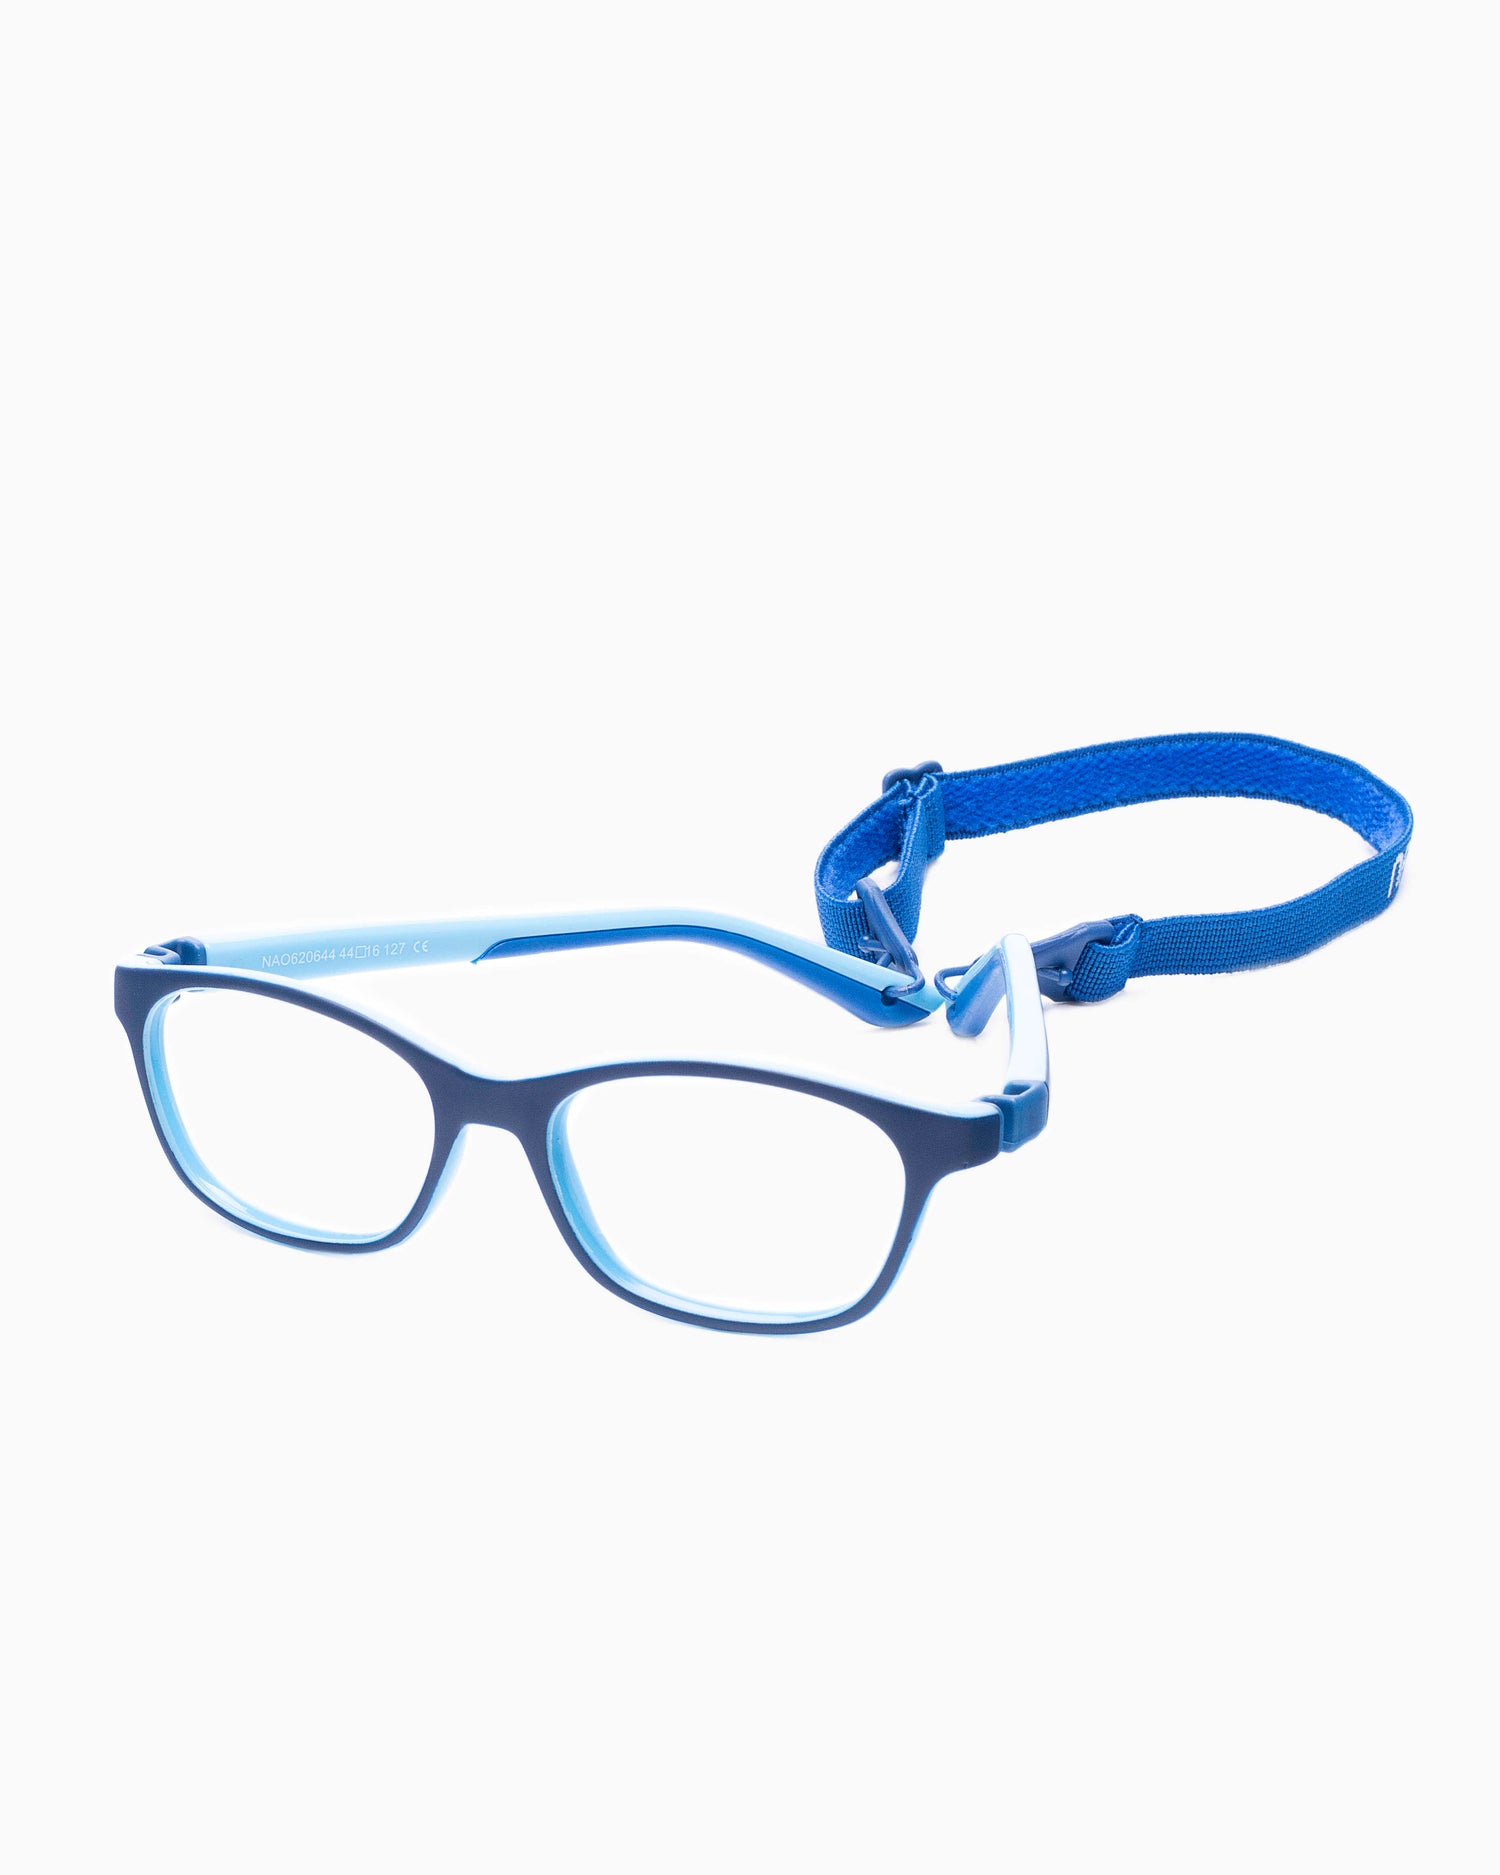 Nanovista Kids - CAMPER - BLUEBLUE | Bar à lunettes:  Marie-Sophie Dion